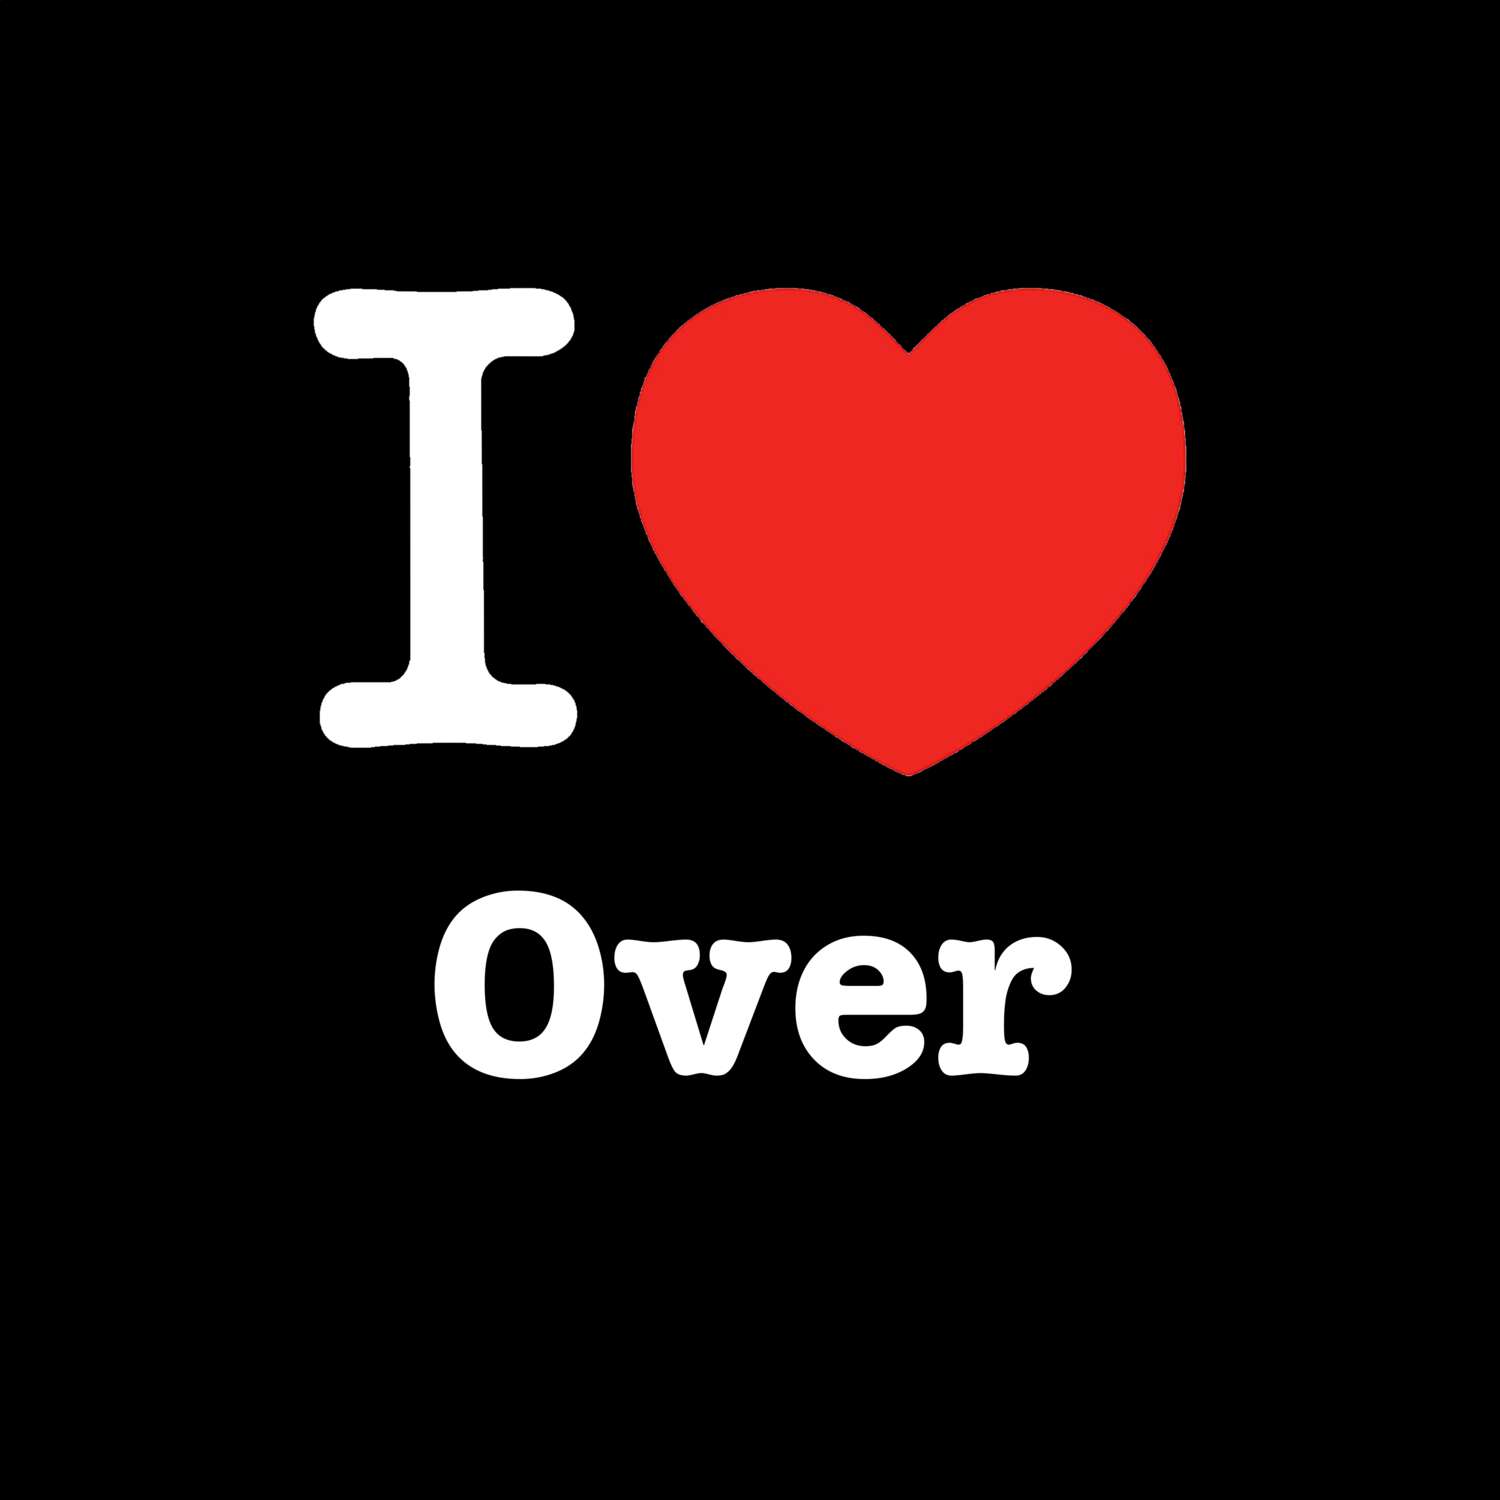 Over T-Shirt »I love«